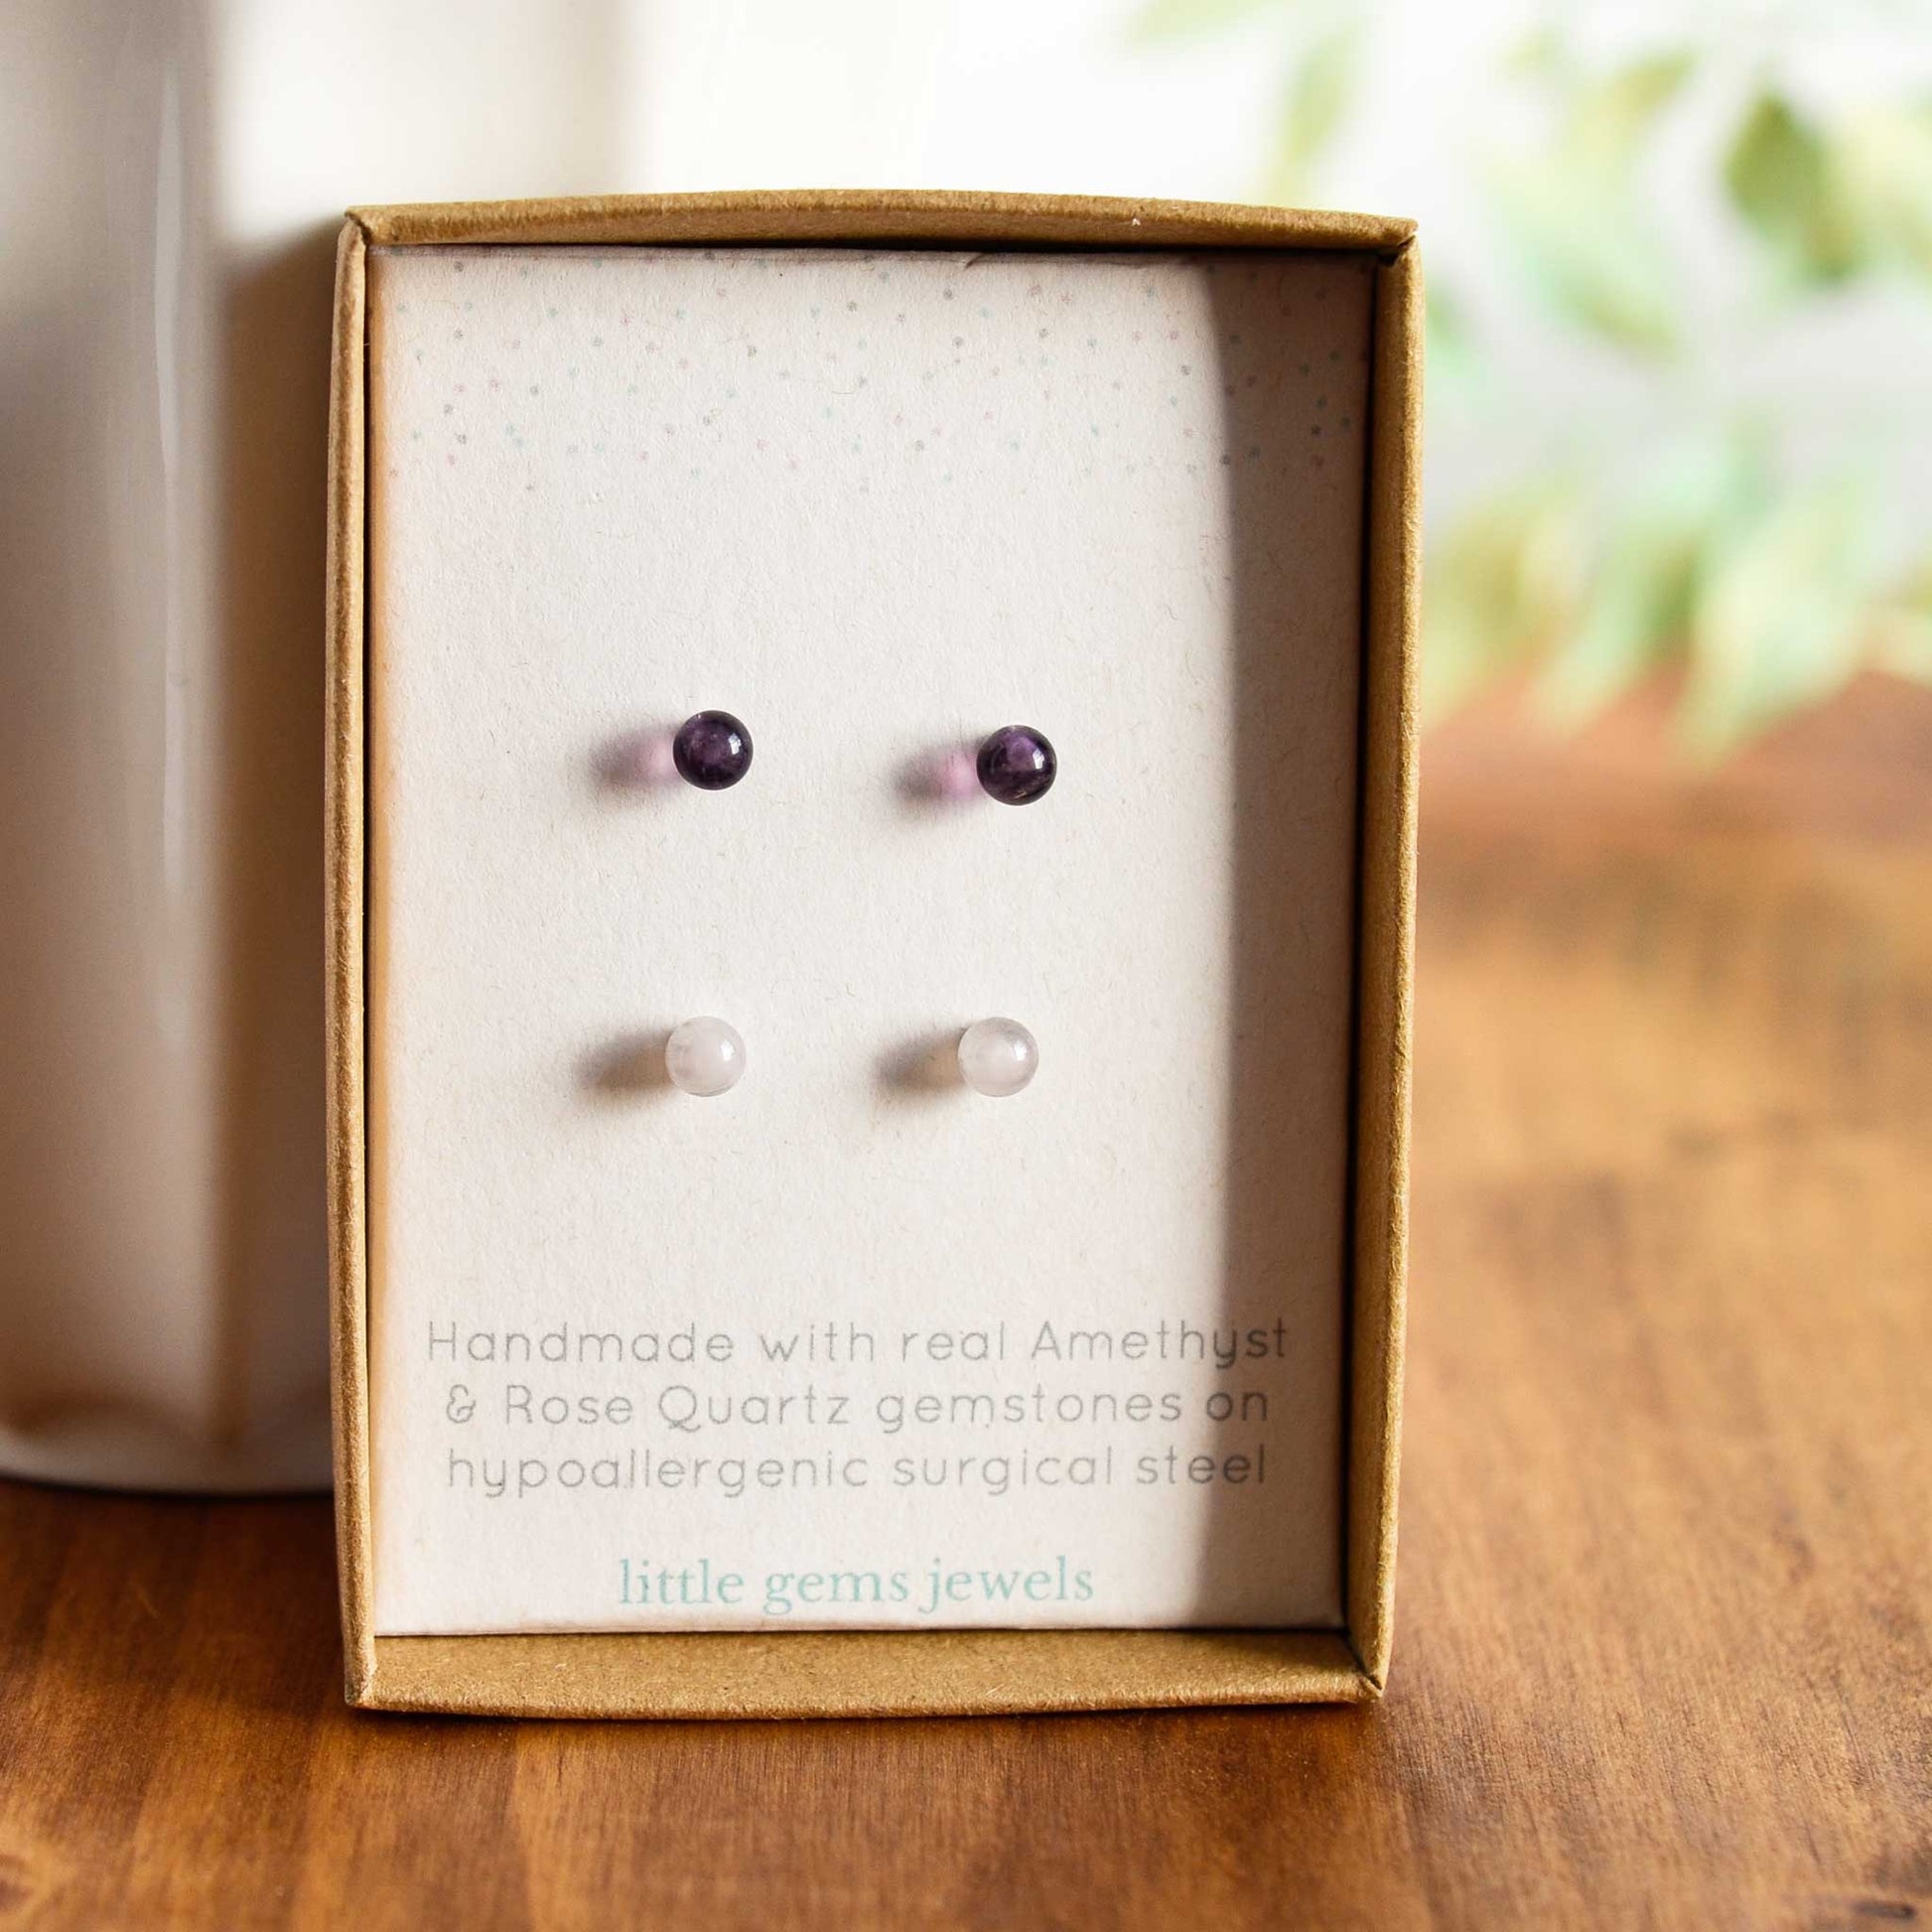 Amethyst & Rose Quartz gemstone stud earrings in eco friendly gift box